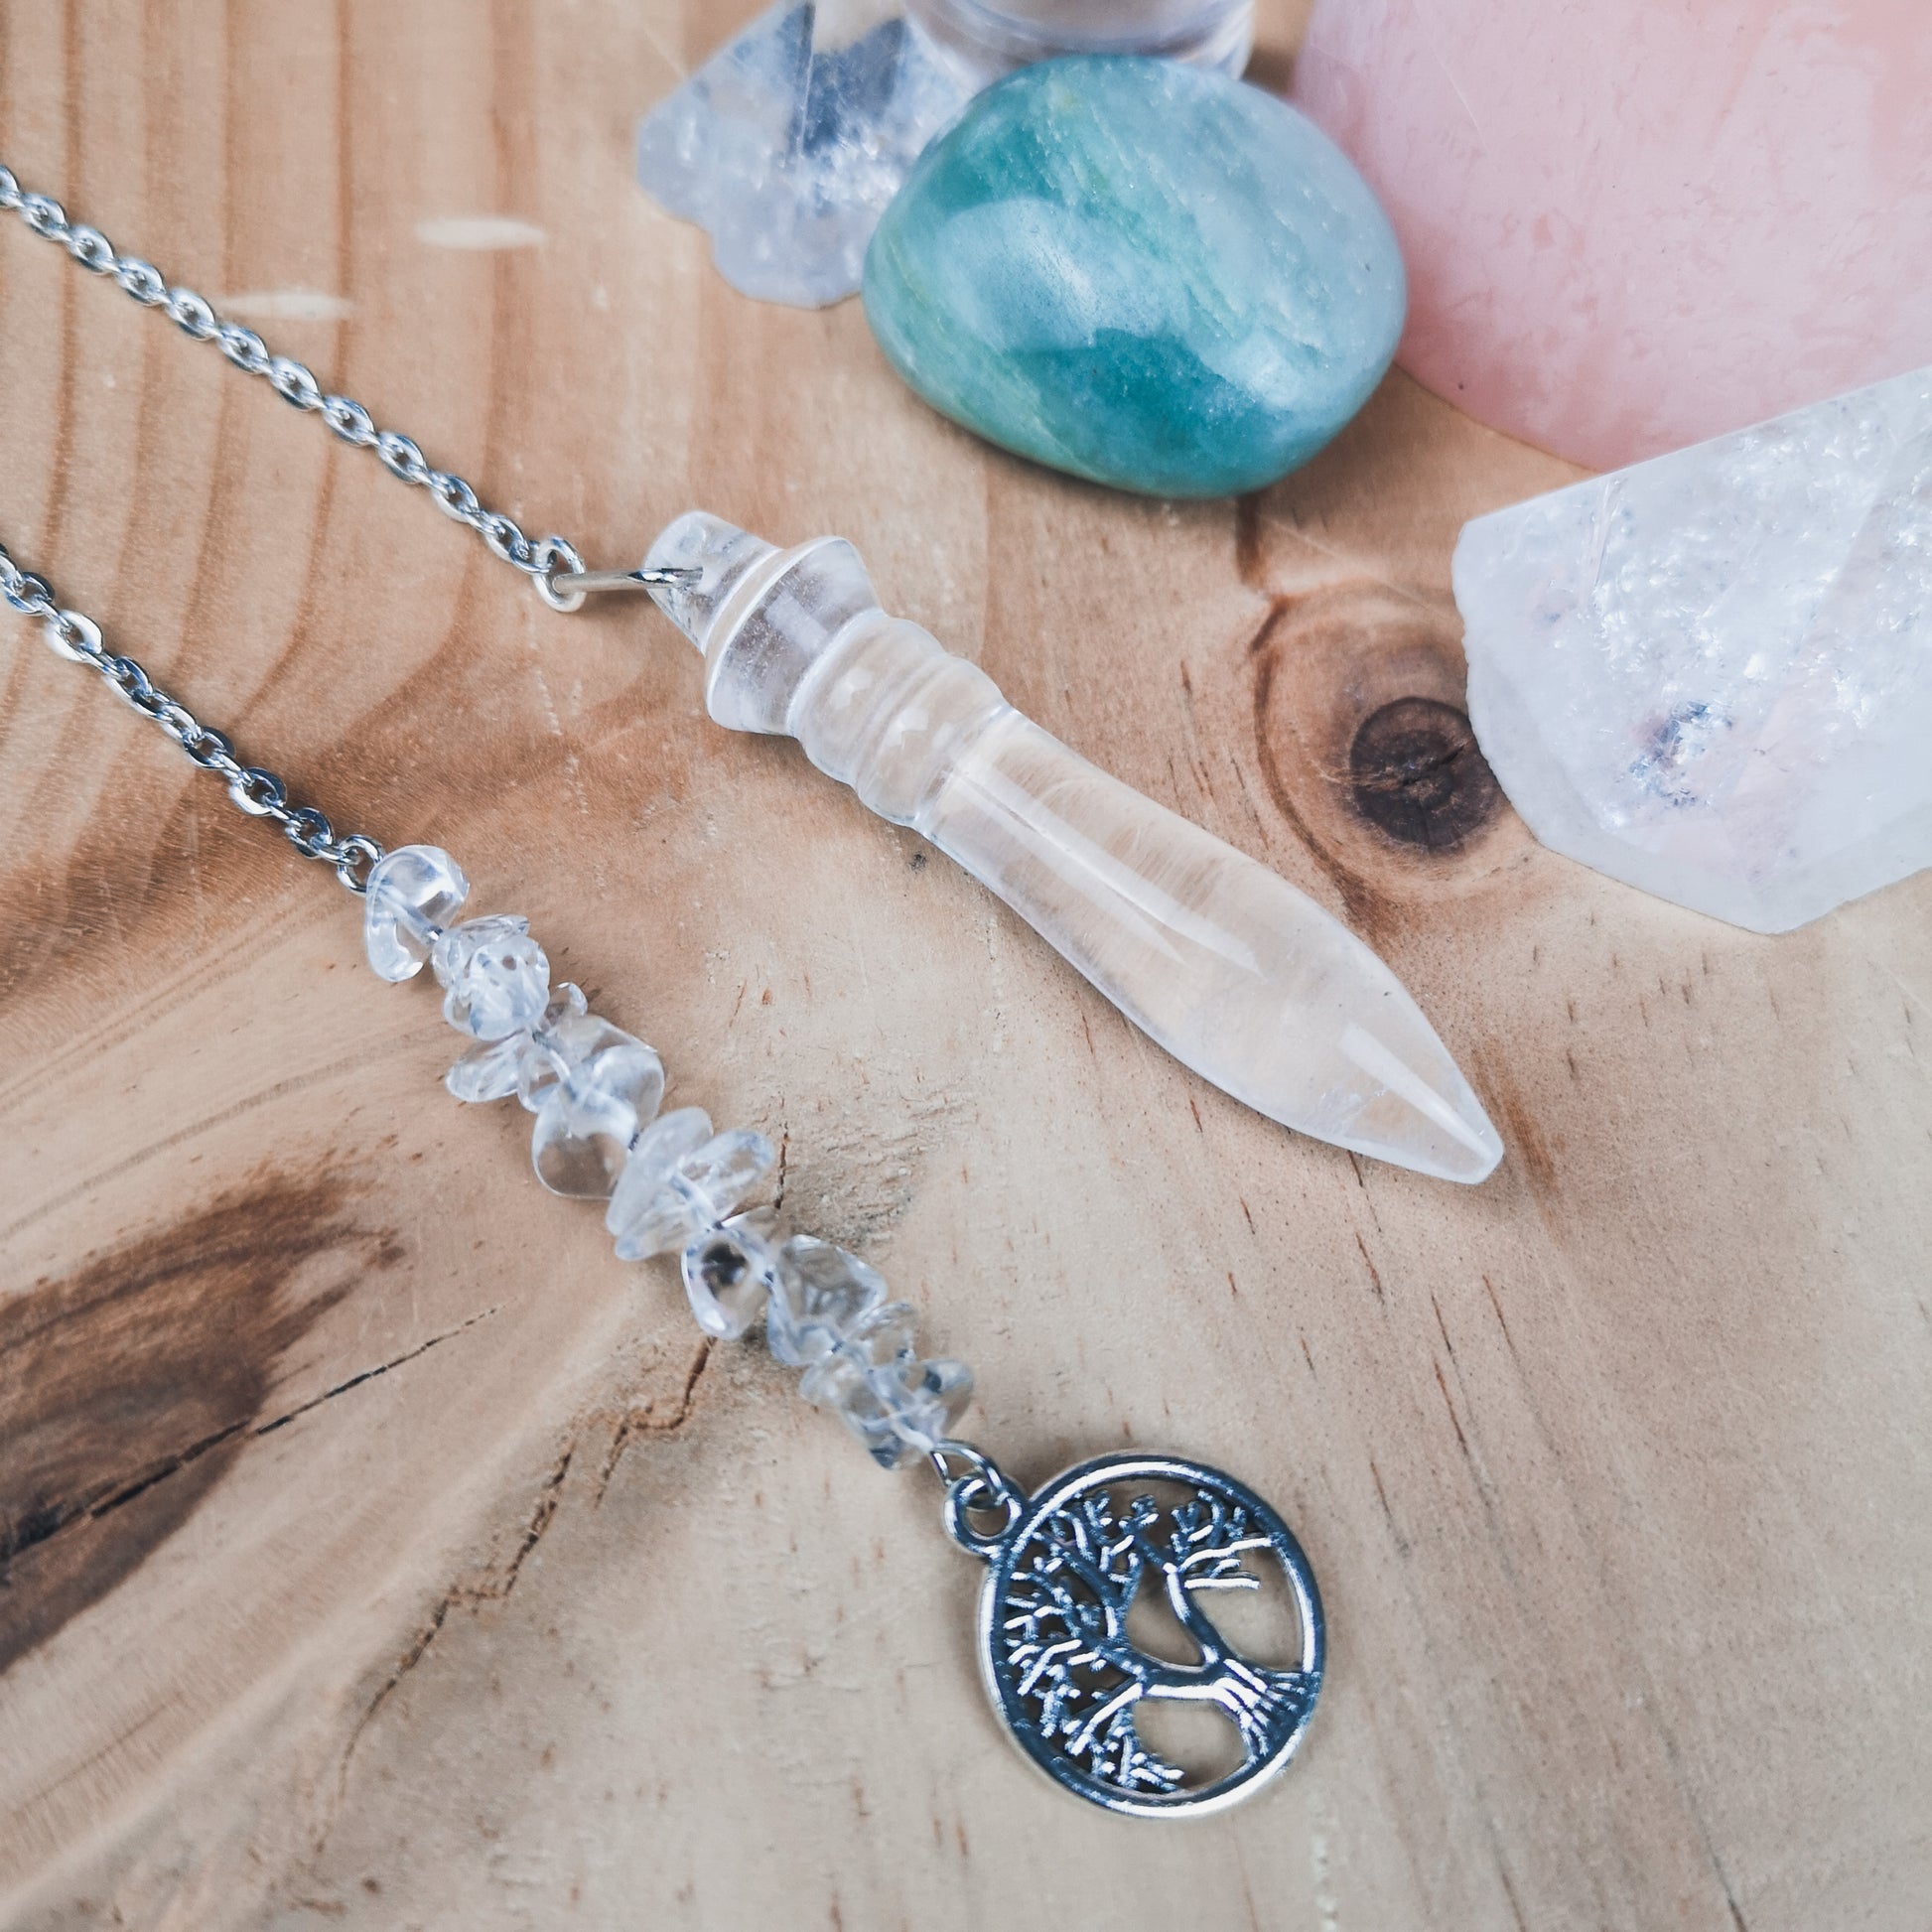 Egyptian Thot pendulum clear quartz and tree of life Baguette Magick